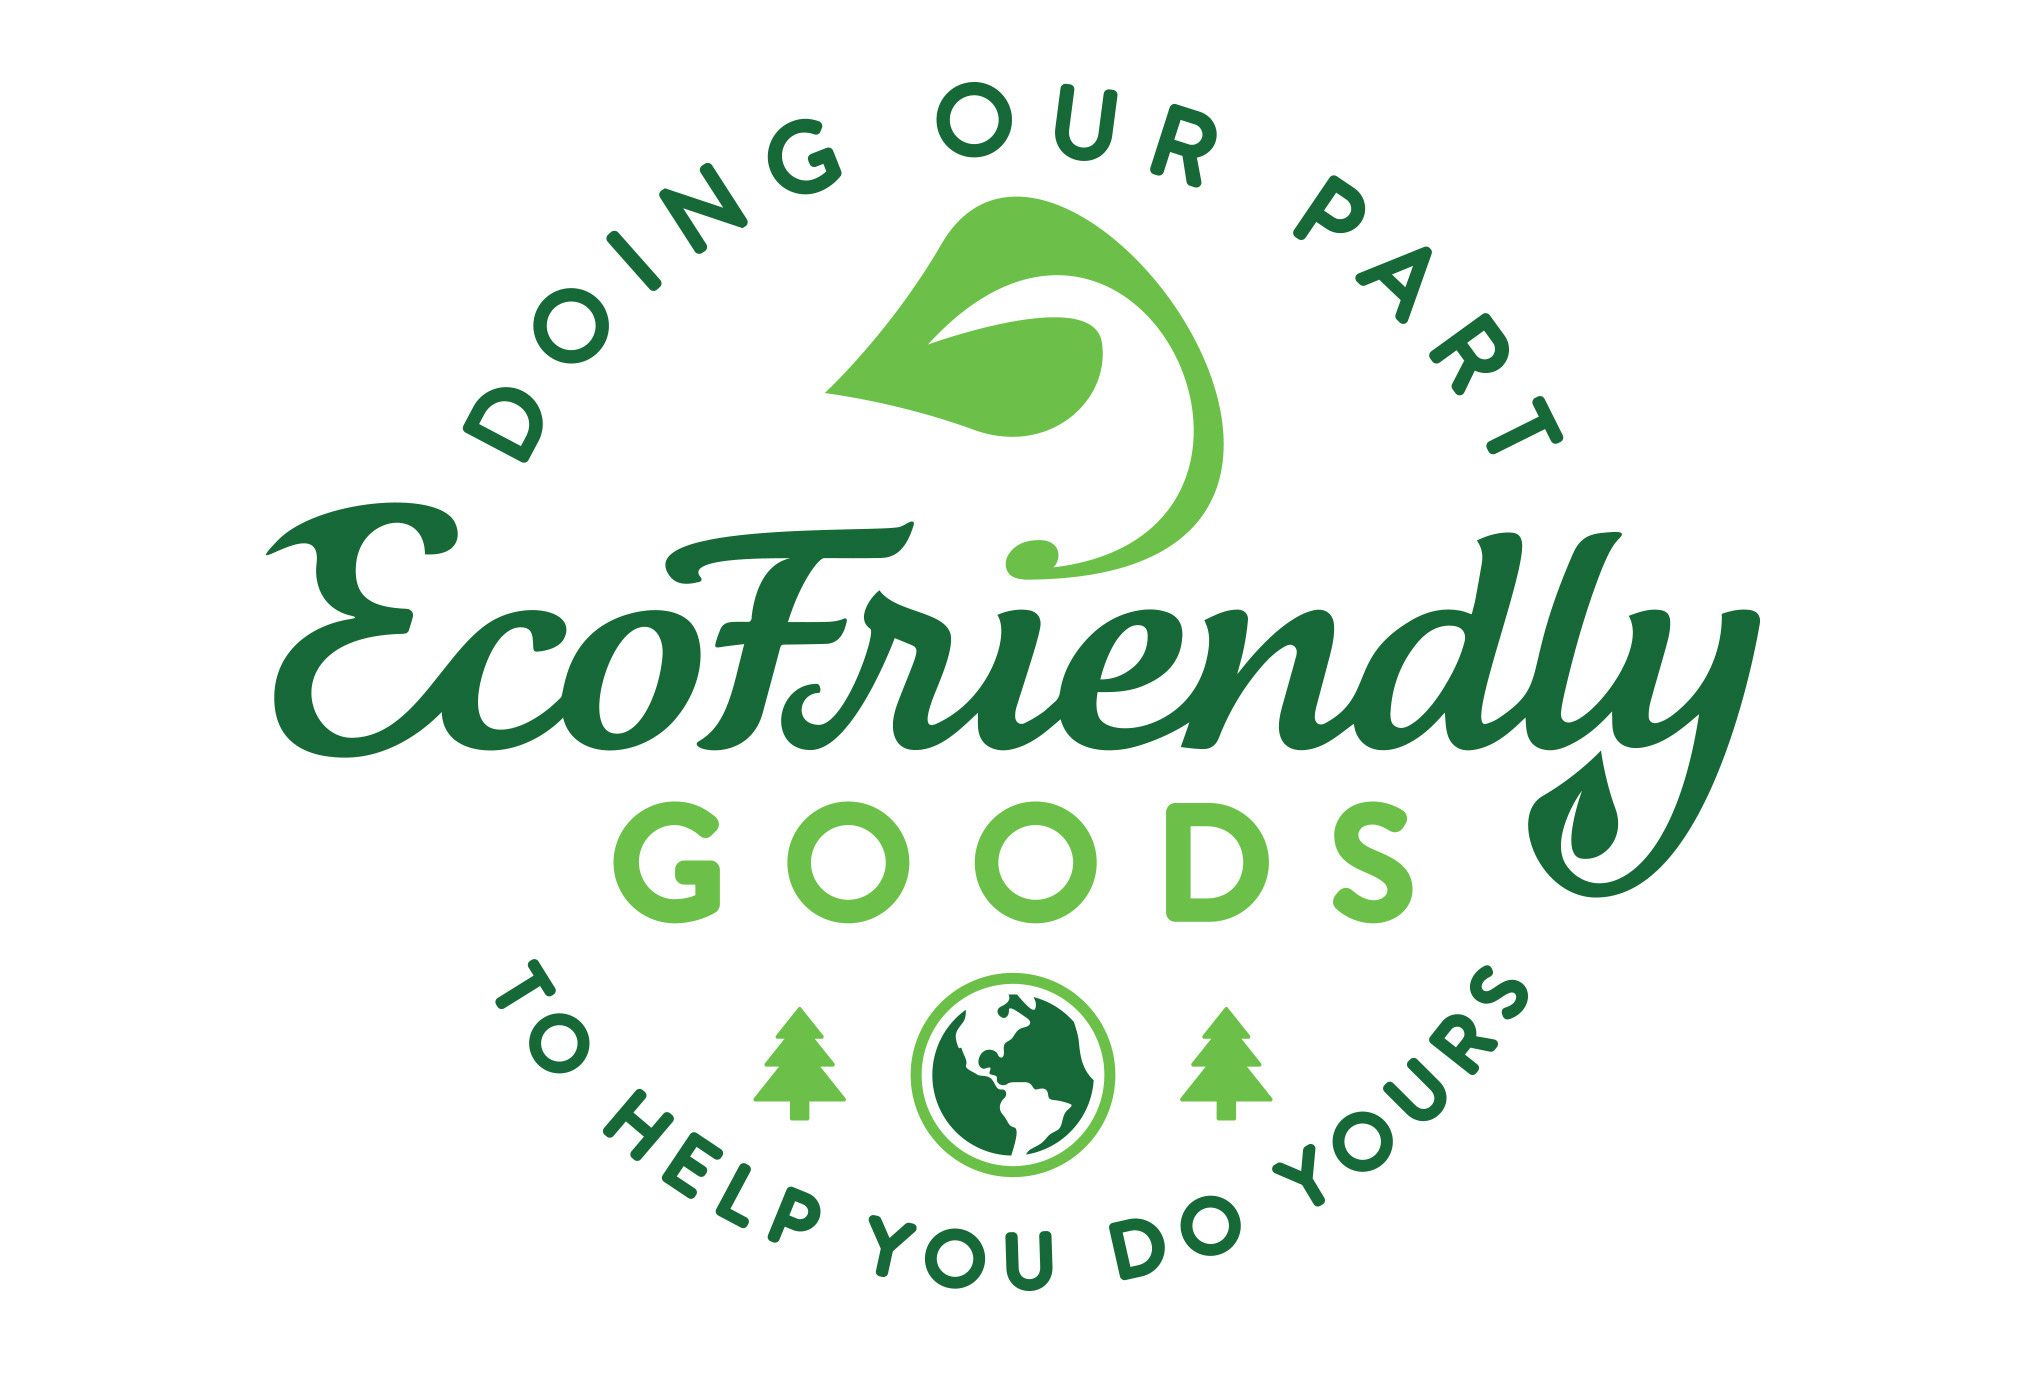 ecofriendly goods organic logo design by left hand design in austin texas